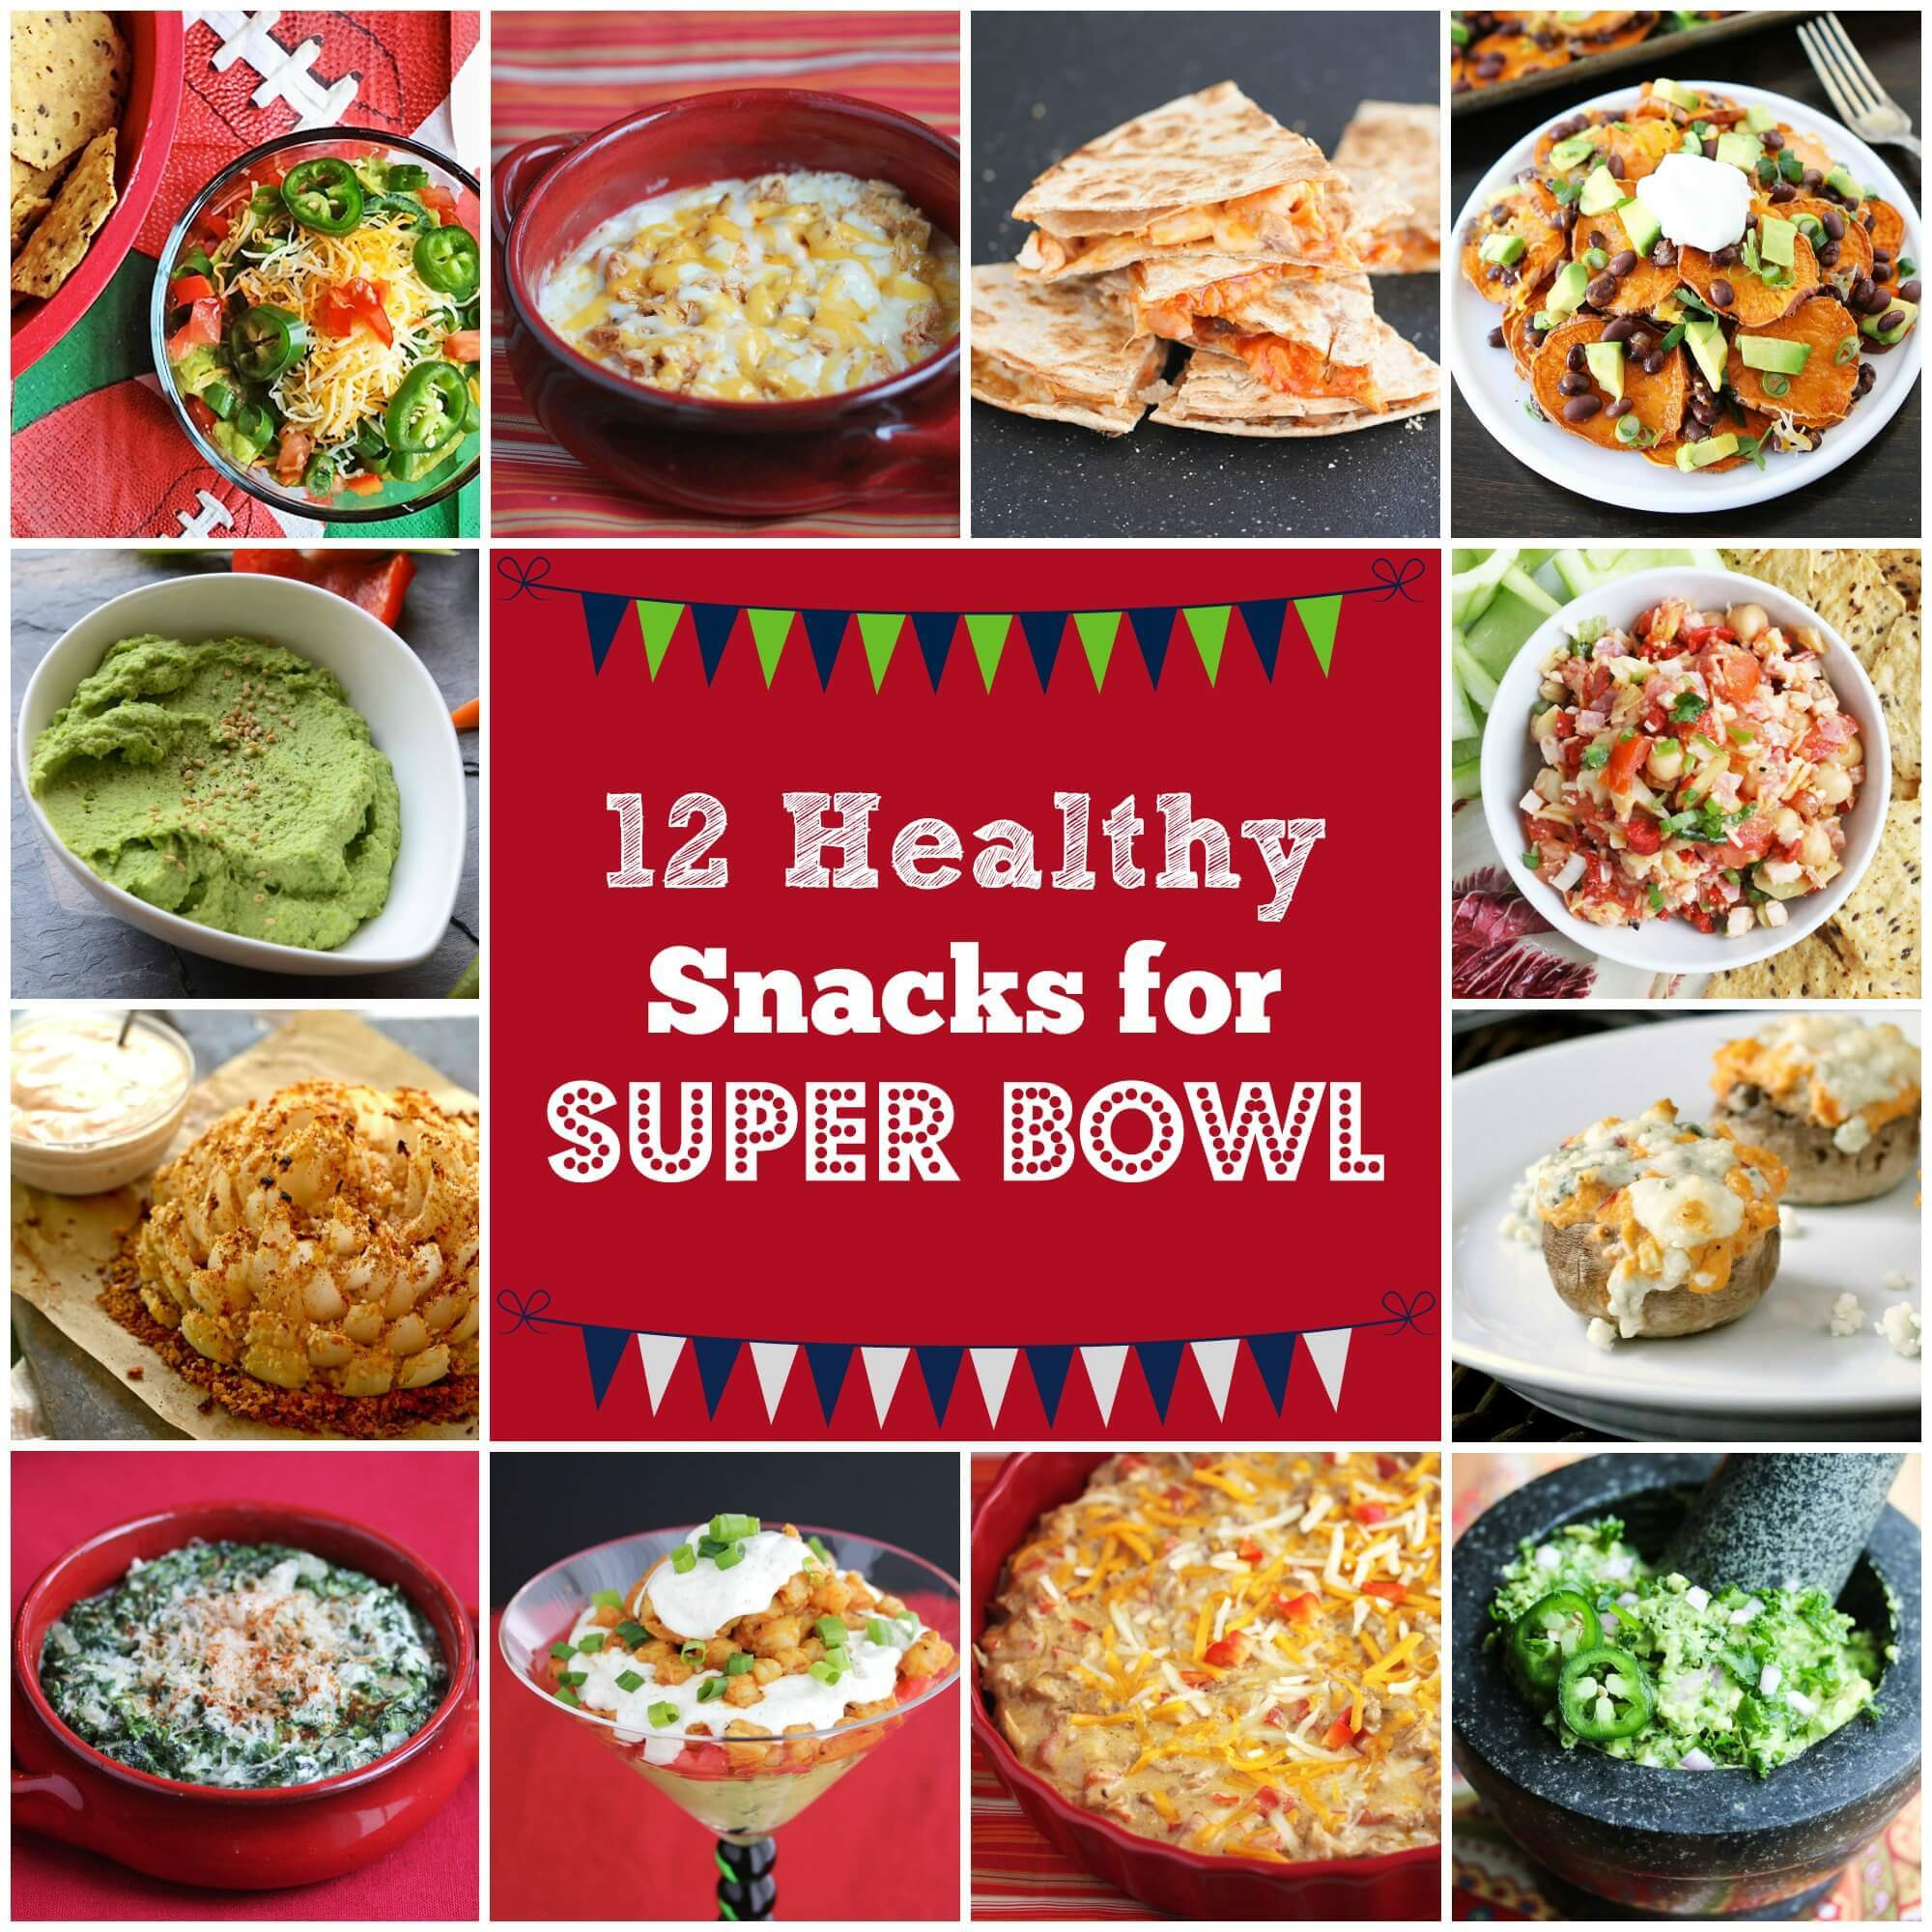 Healthy Super Bowl Snacks
 healthy superbowl food recipes